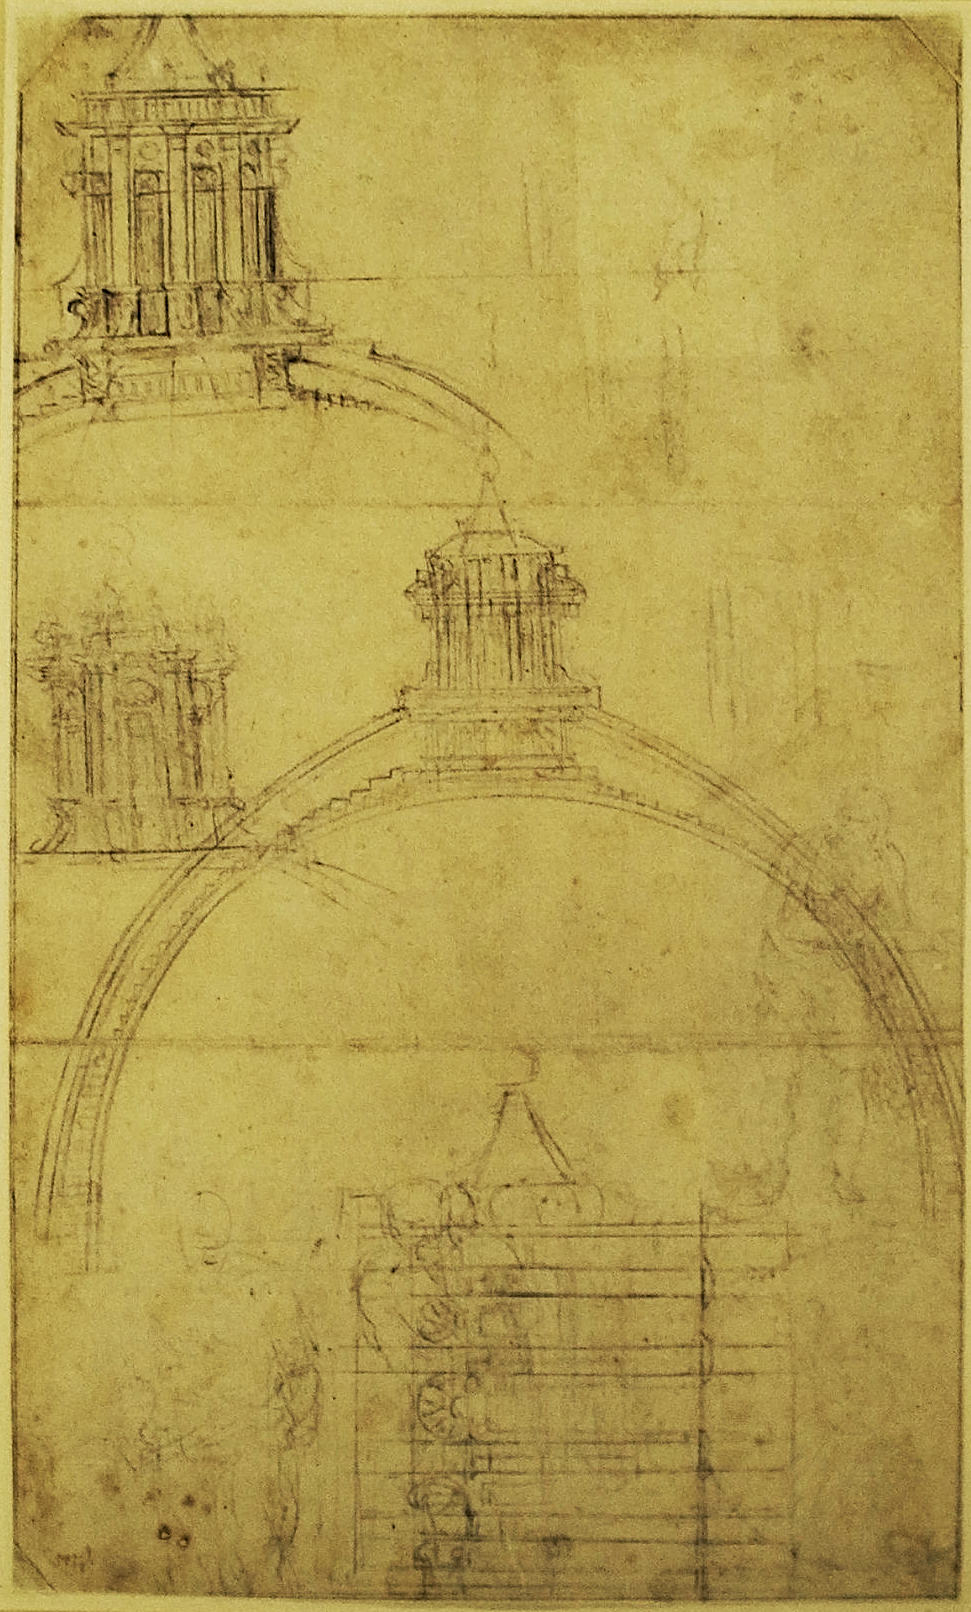 Michelangelo Buonarroti as Architect